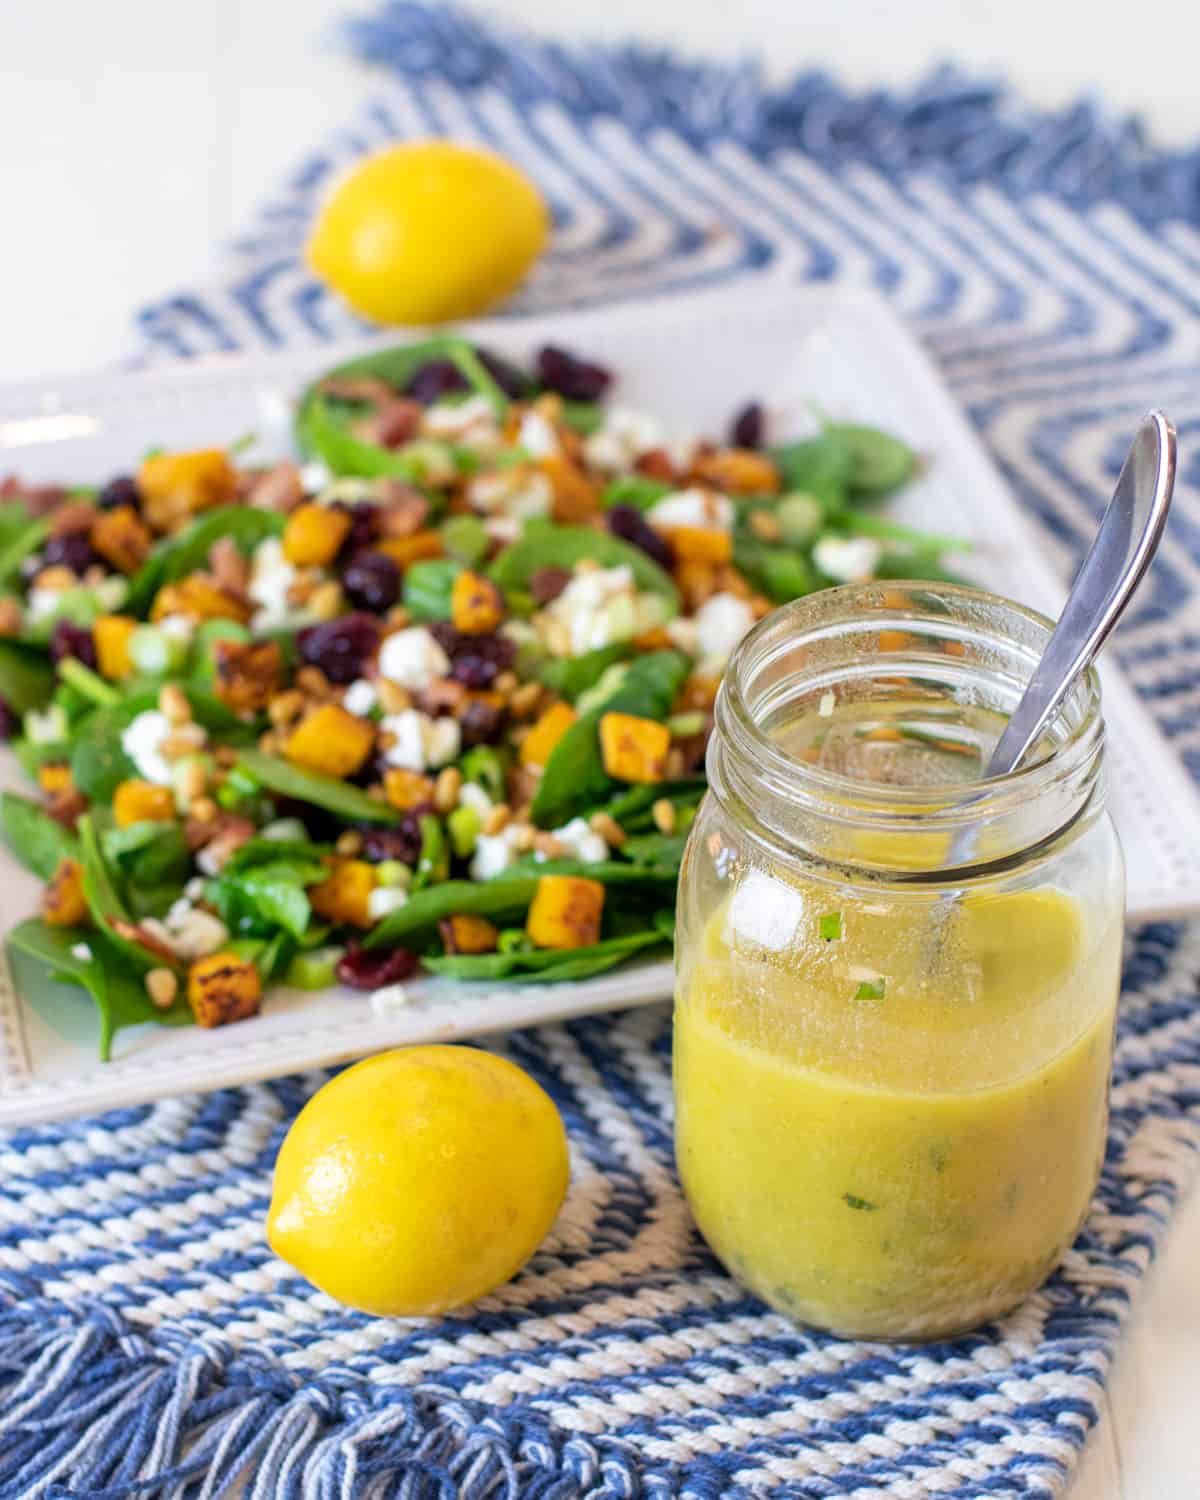 Overhead picture of a salad and a jar of lemon vinaigrette.